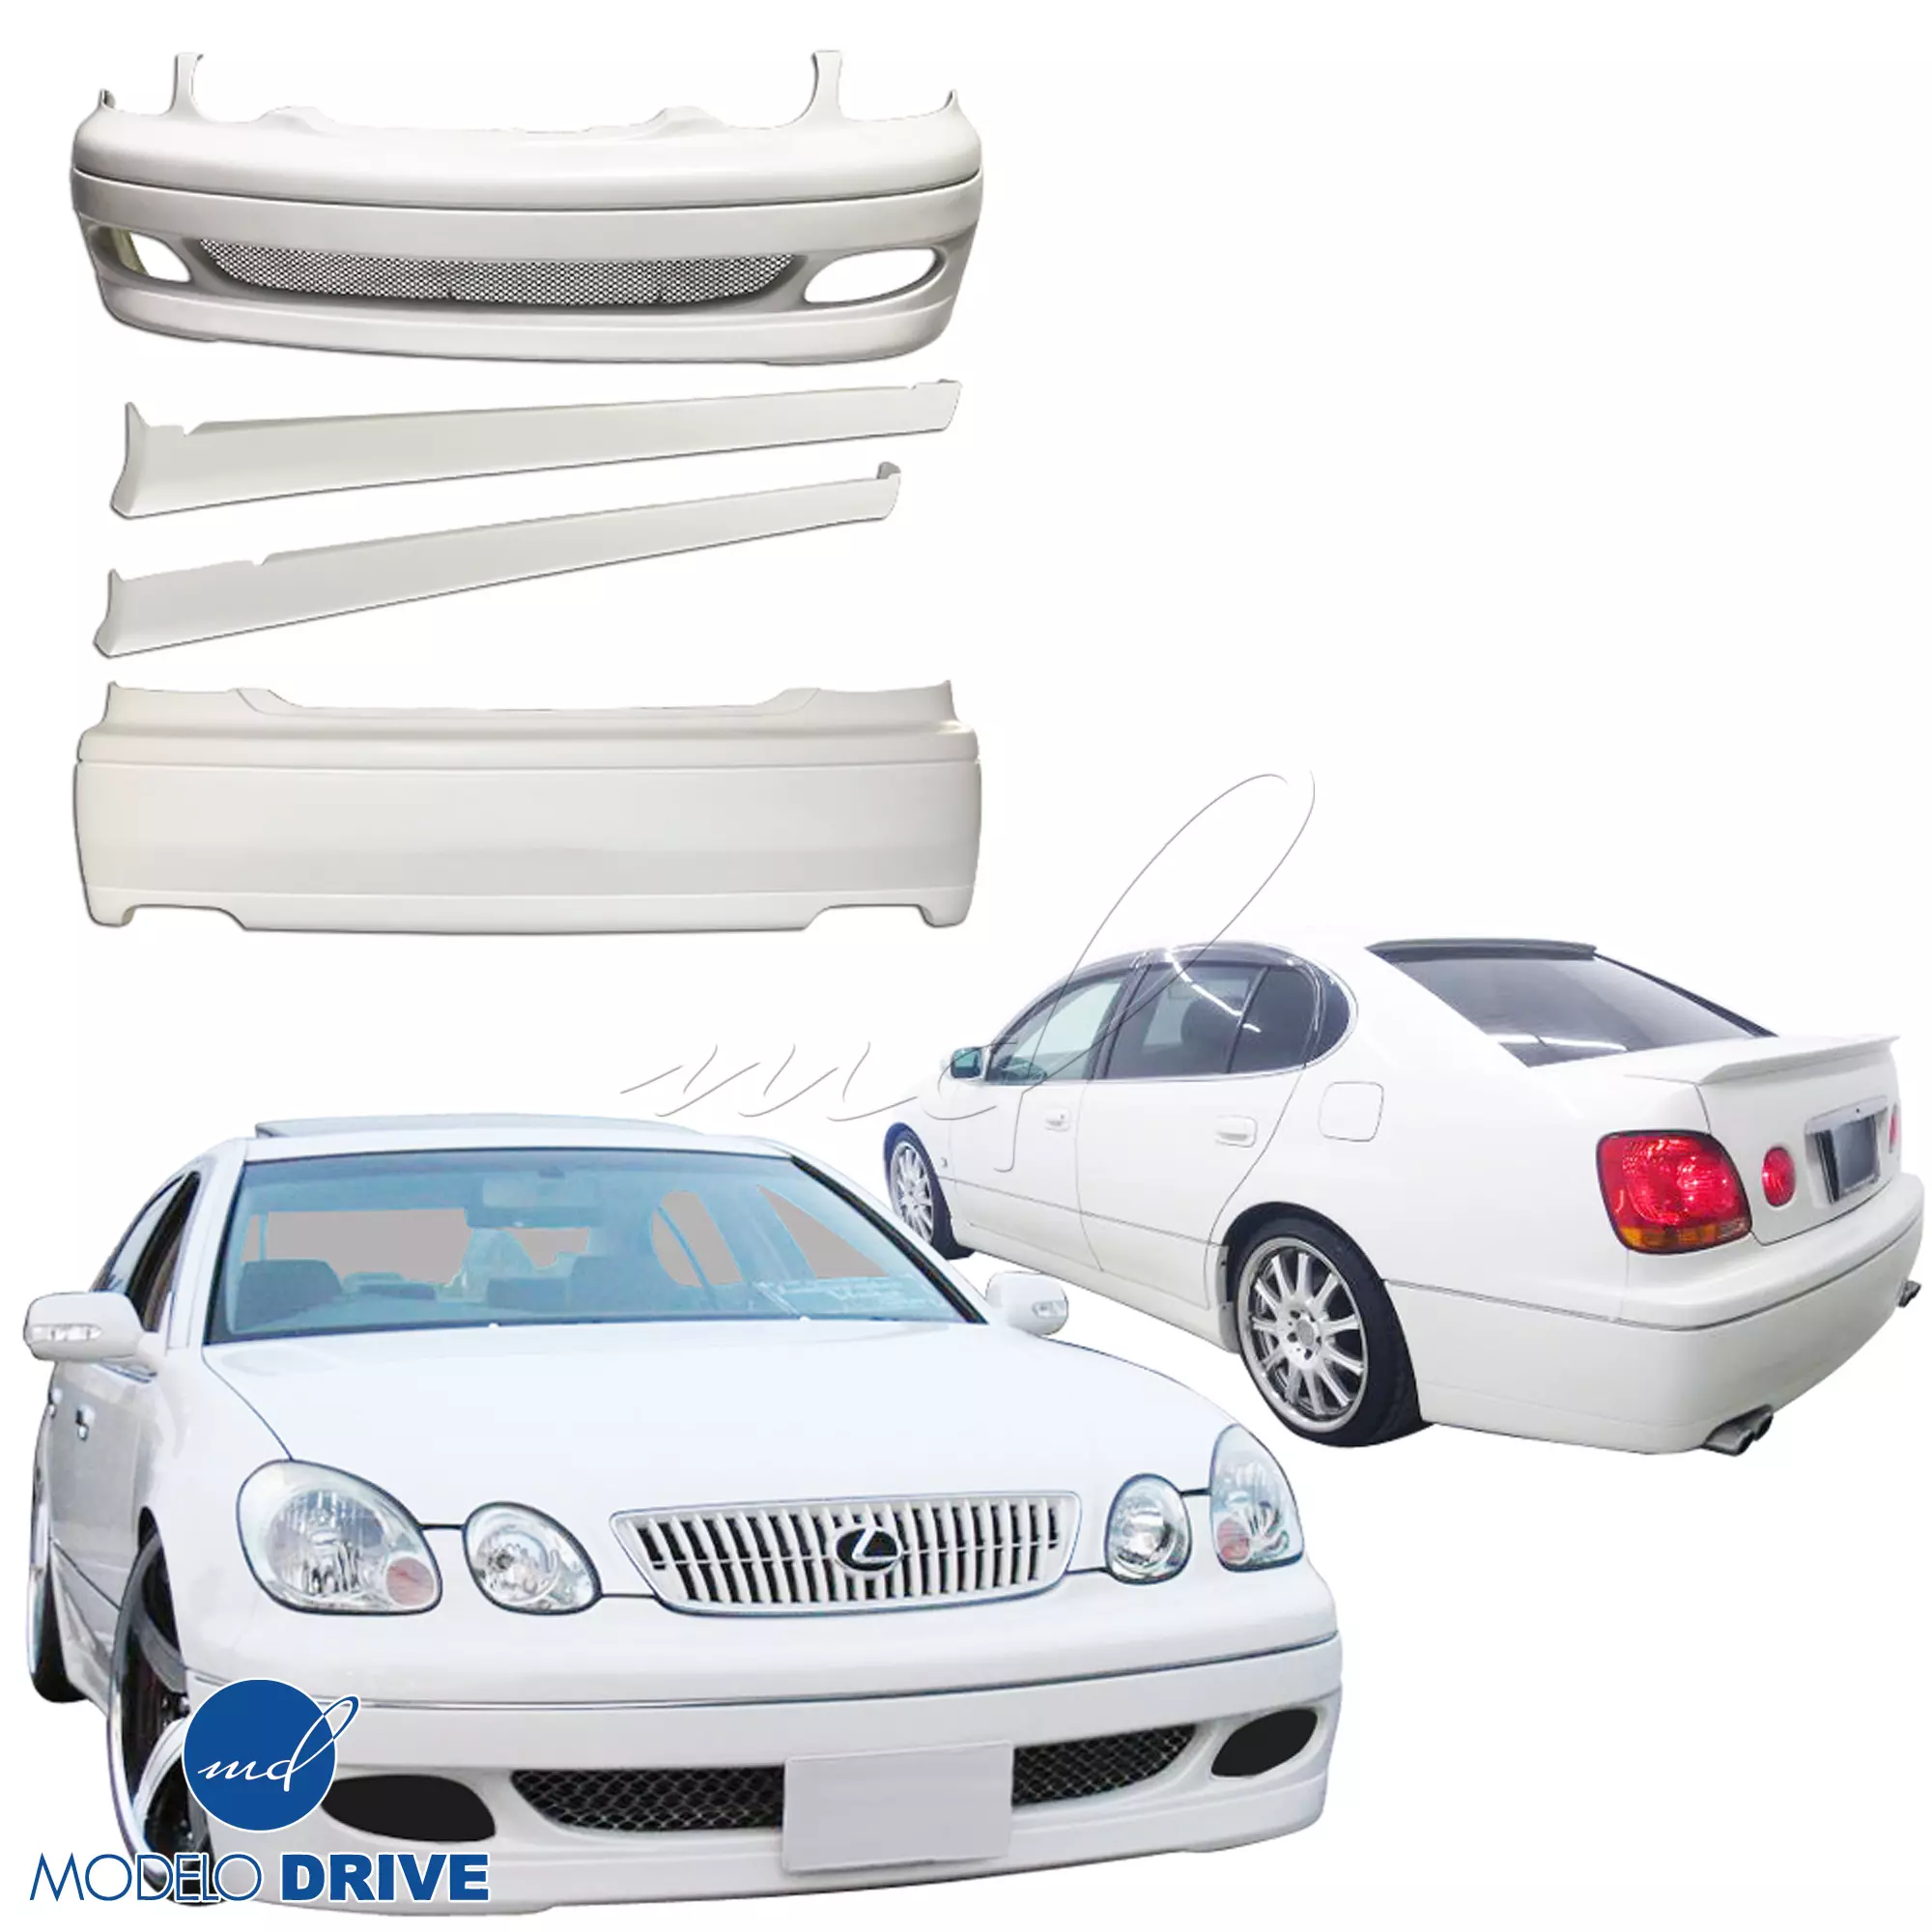 ModeloDrive FRP JUNT Body Kit 4pc > Lexus GS Series GS400 GS300 1998-2005 - Image 74